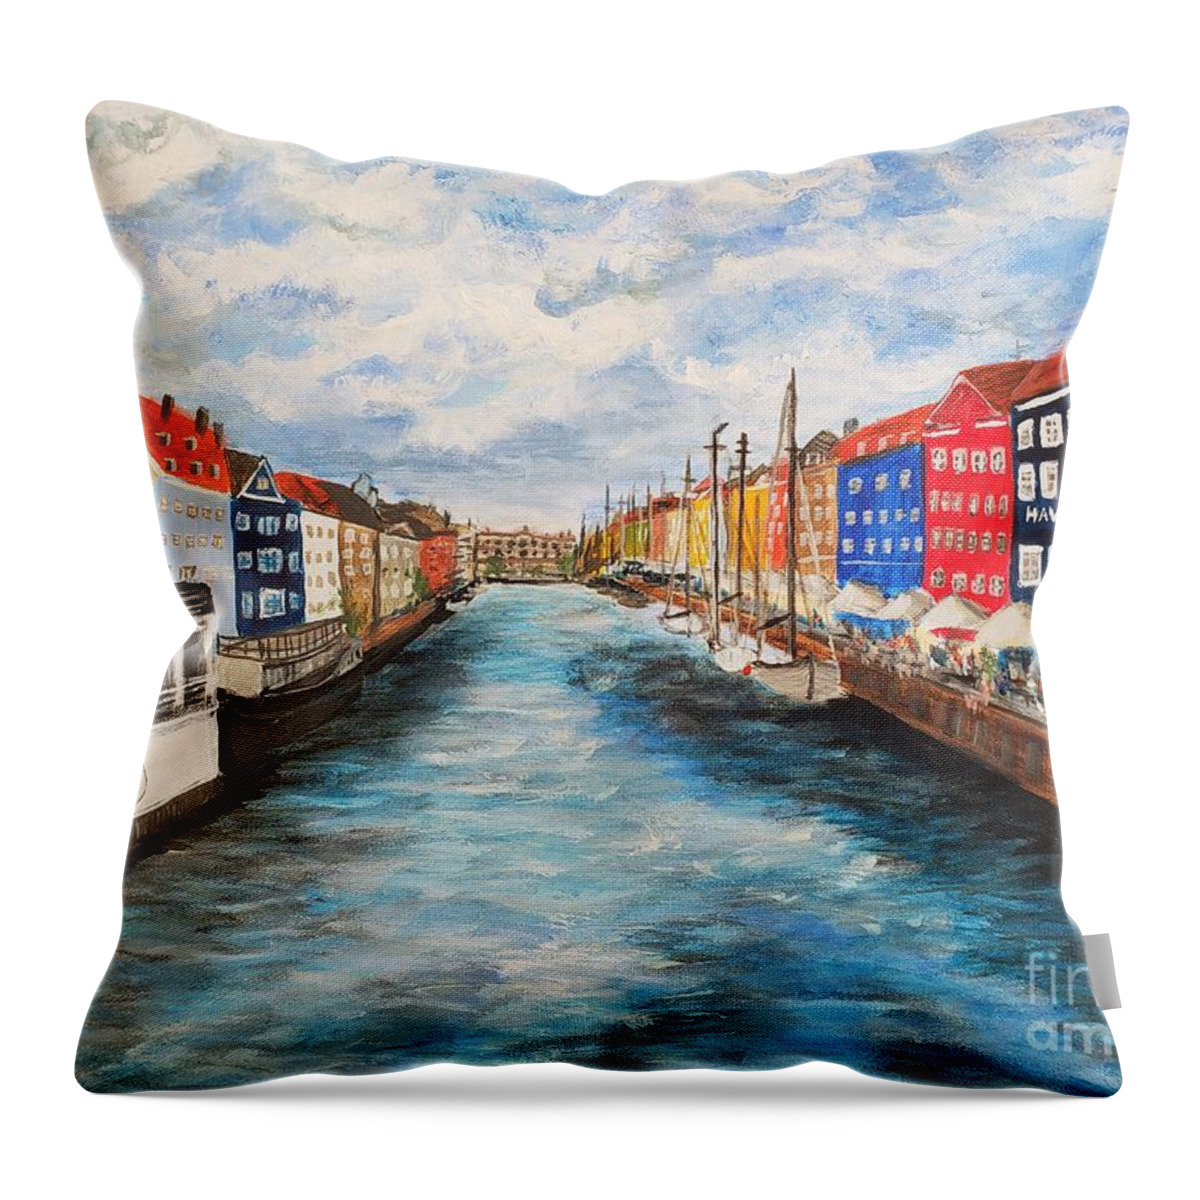 Copenhagen Throw Pillow featuring the painting Nyhavn, Copenhagen, Denmark - Canal View by C E Dill